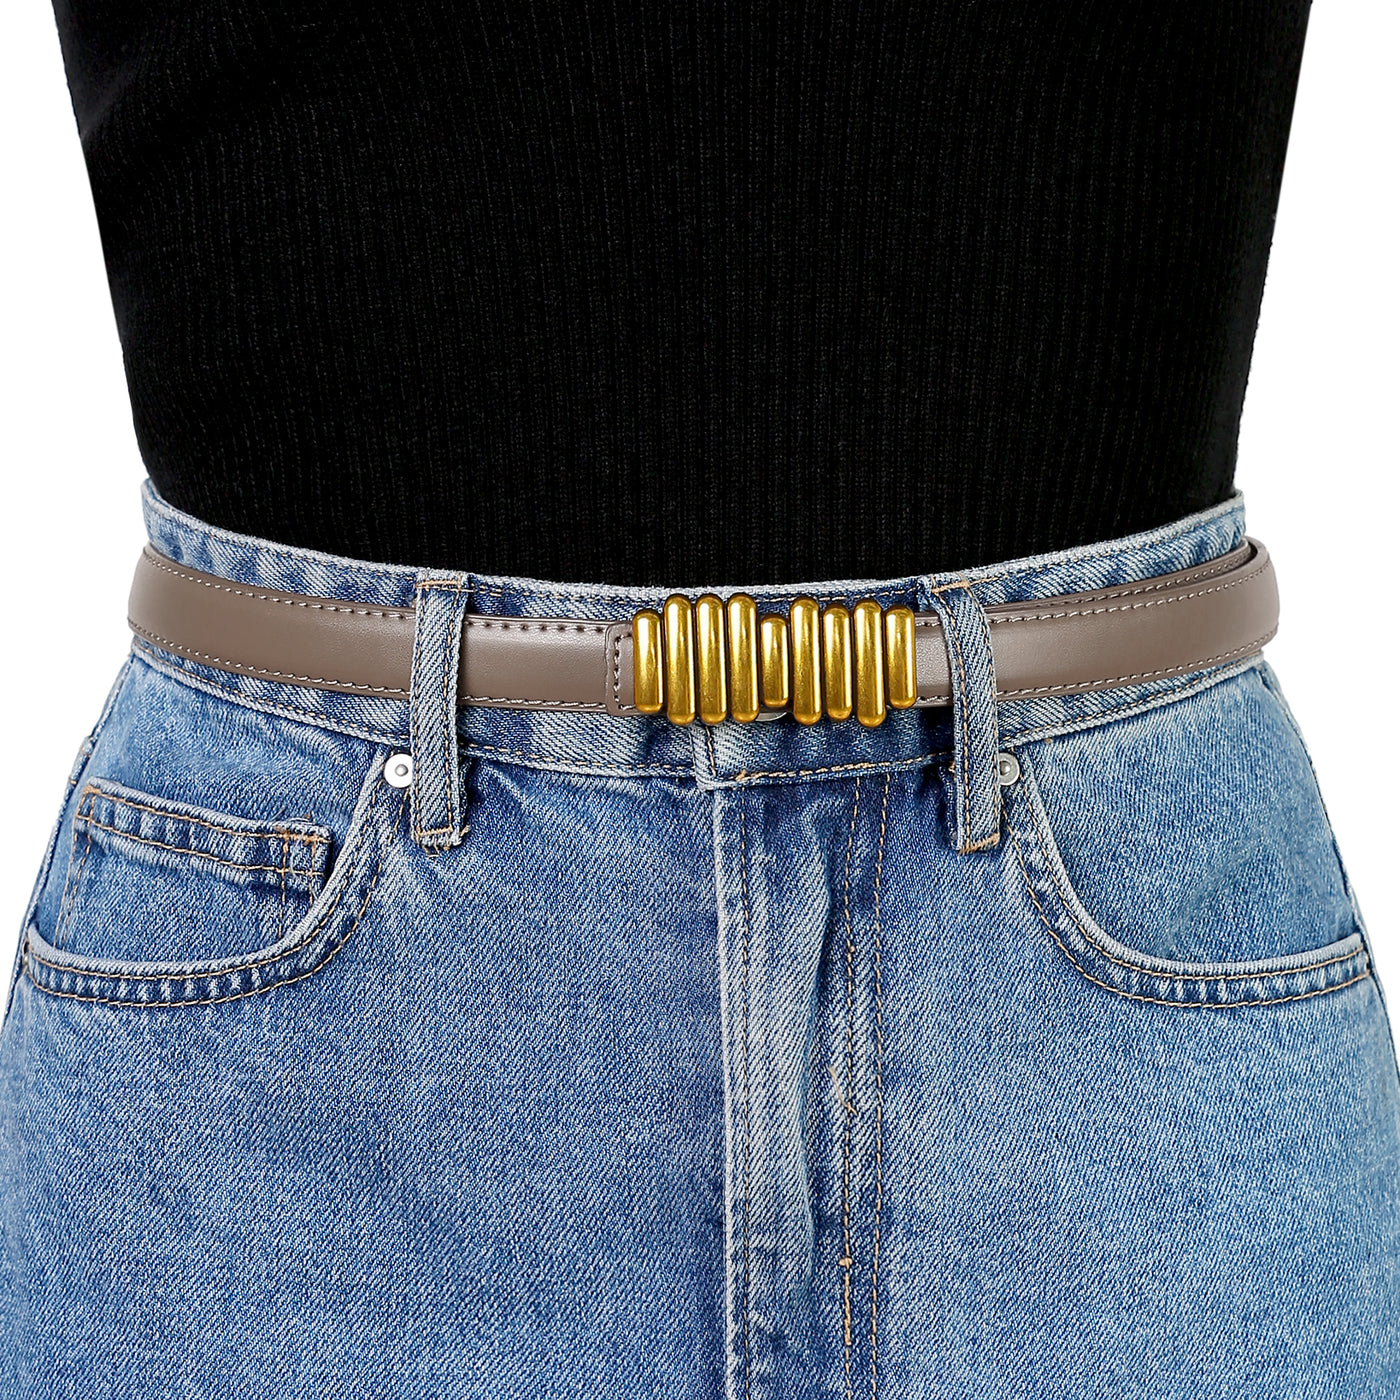 Allegra K Women's Faux Leather Belts Jeans Dress Thin Waist Belt with Chic Designer Buckle